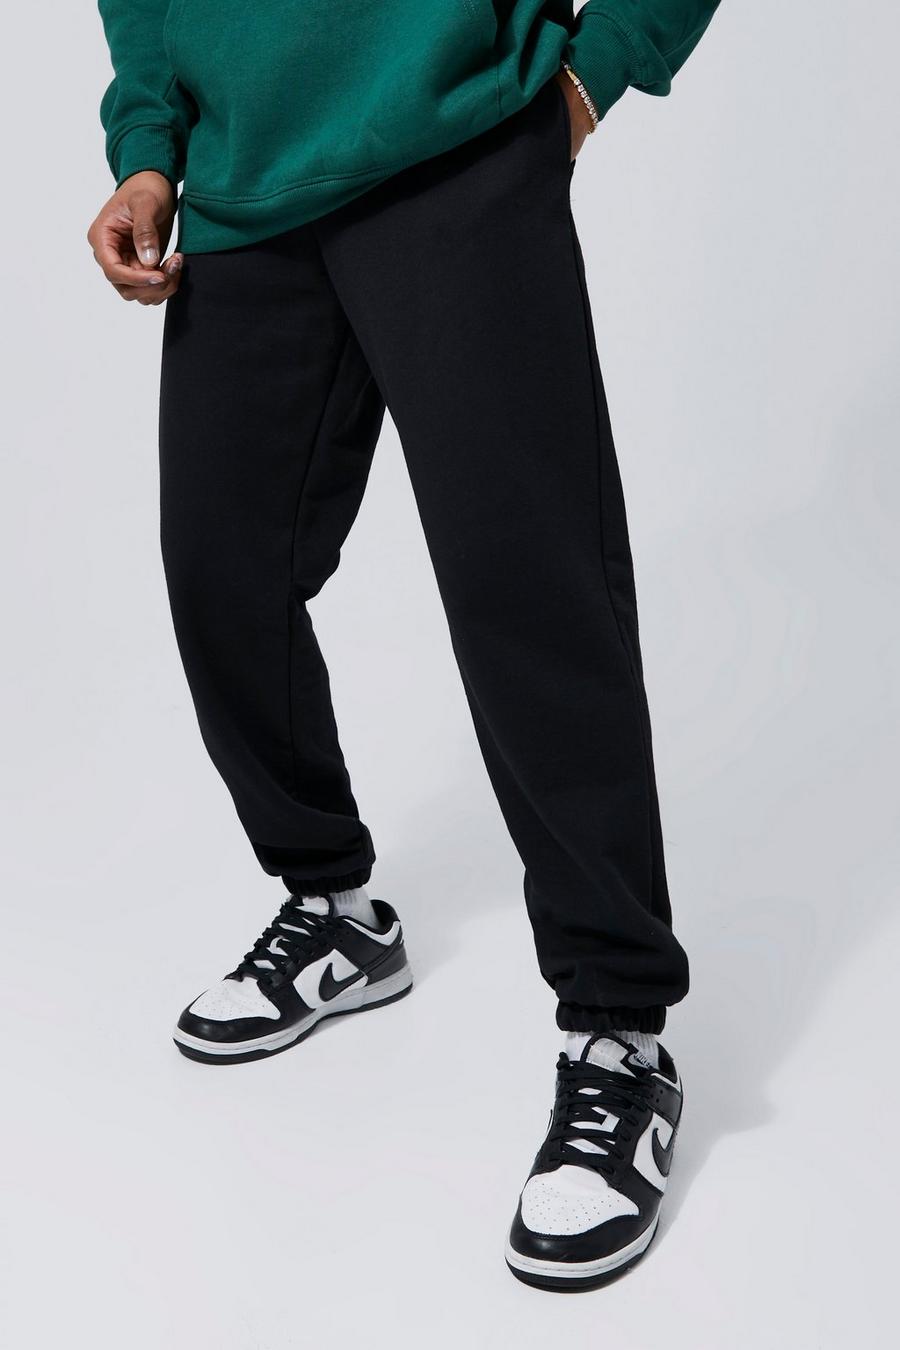 Pantalón deportivo básico ajustado, Black nero